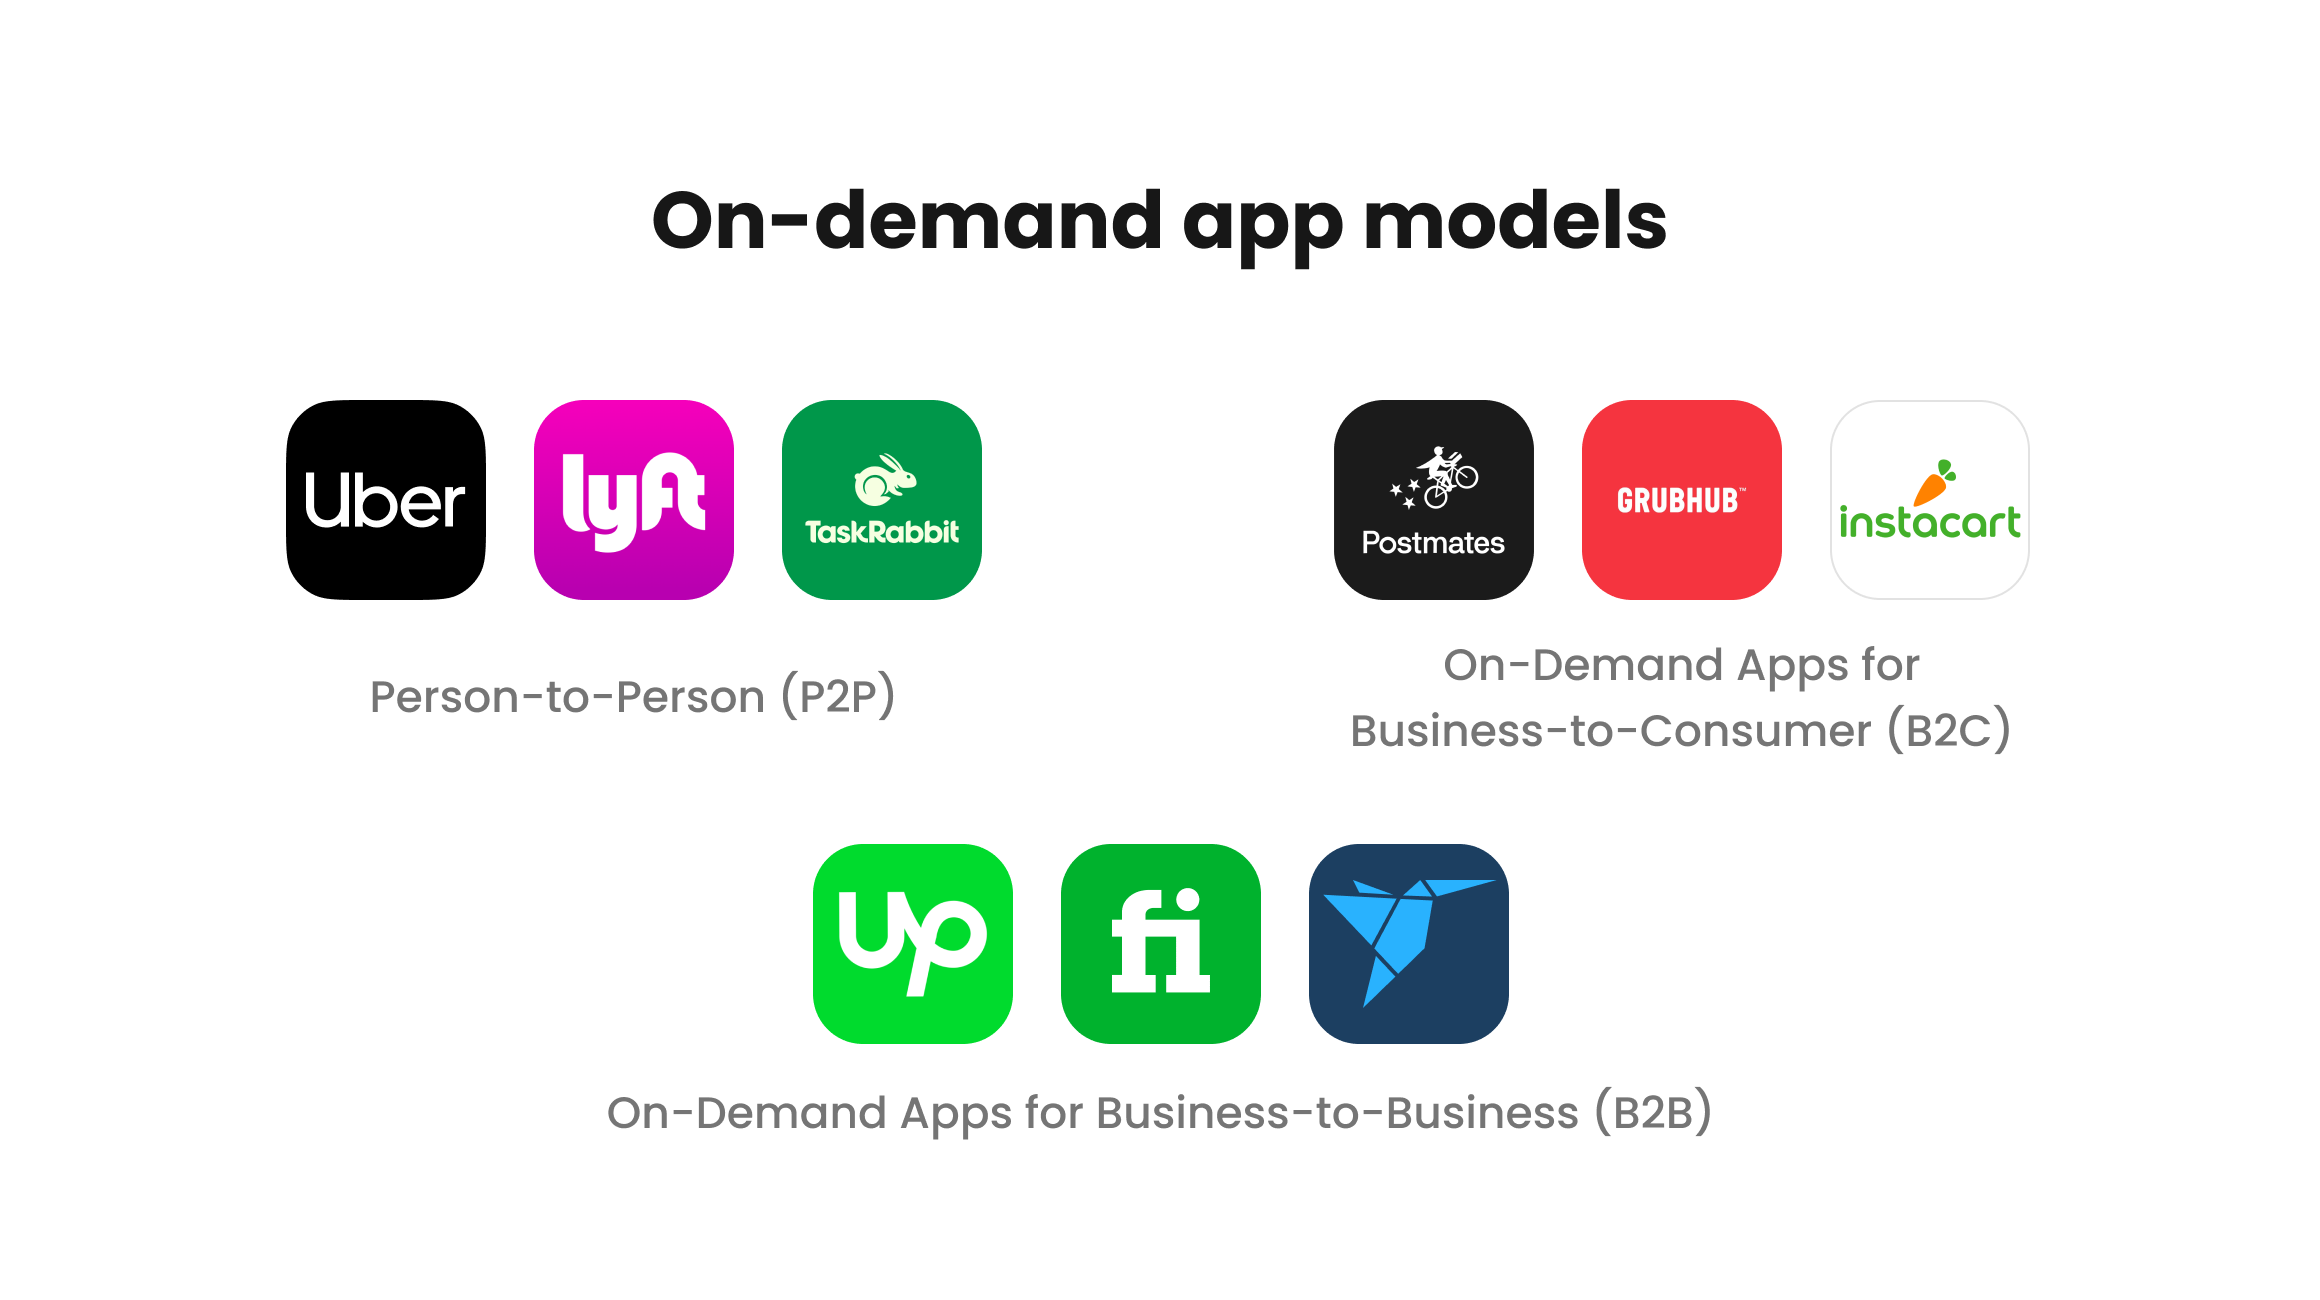 On-demand app models